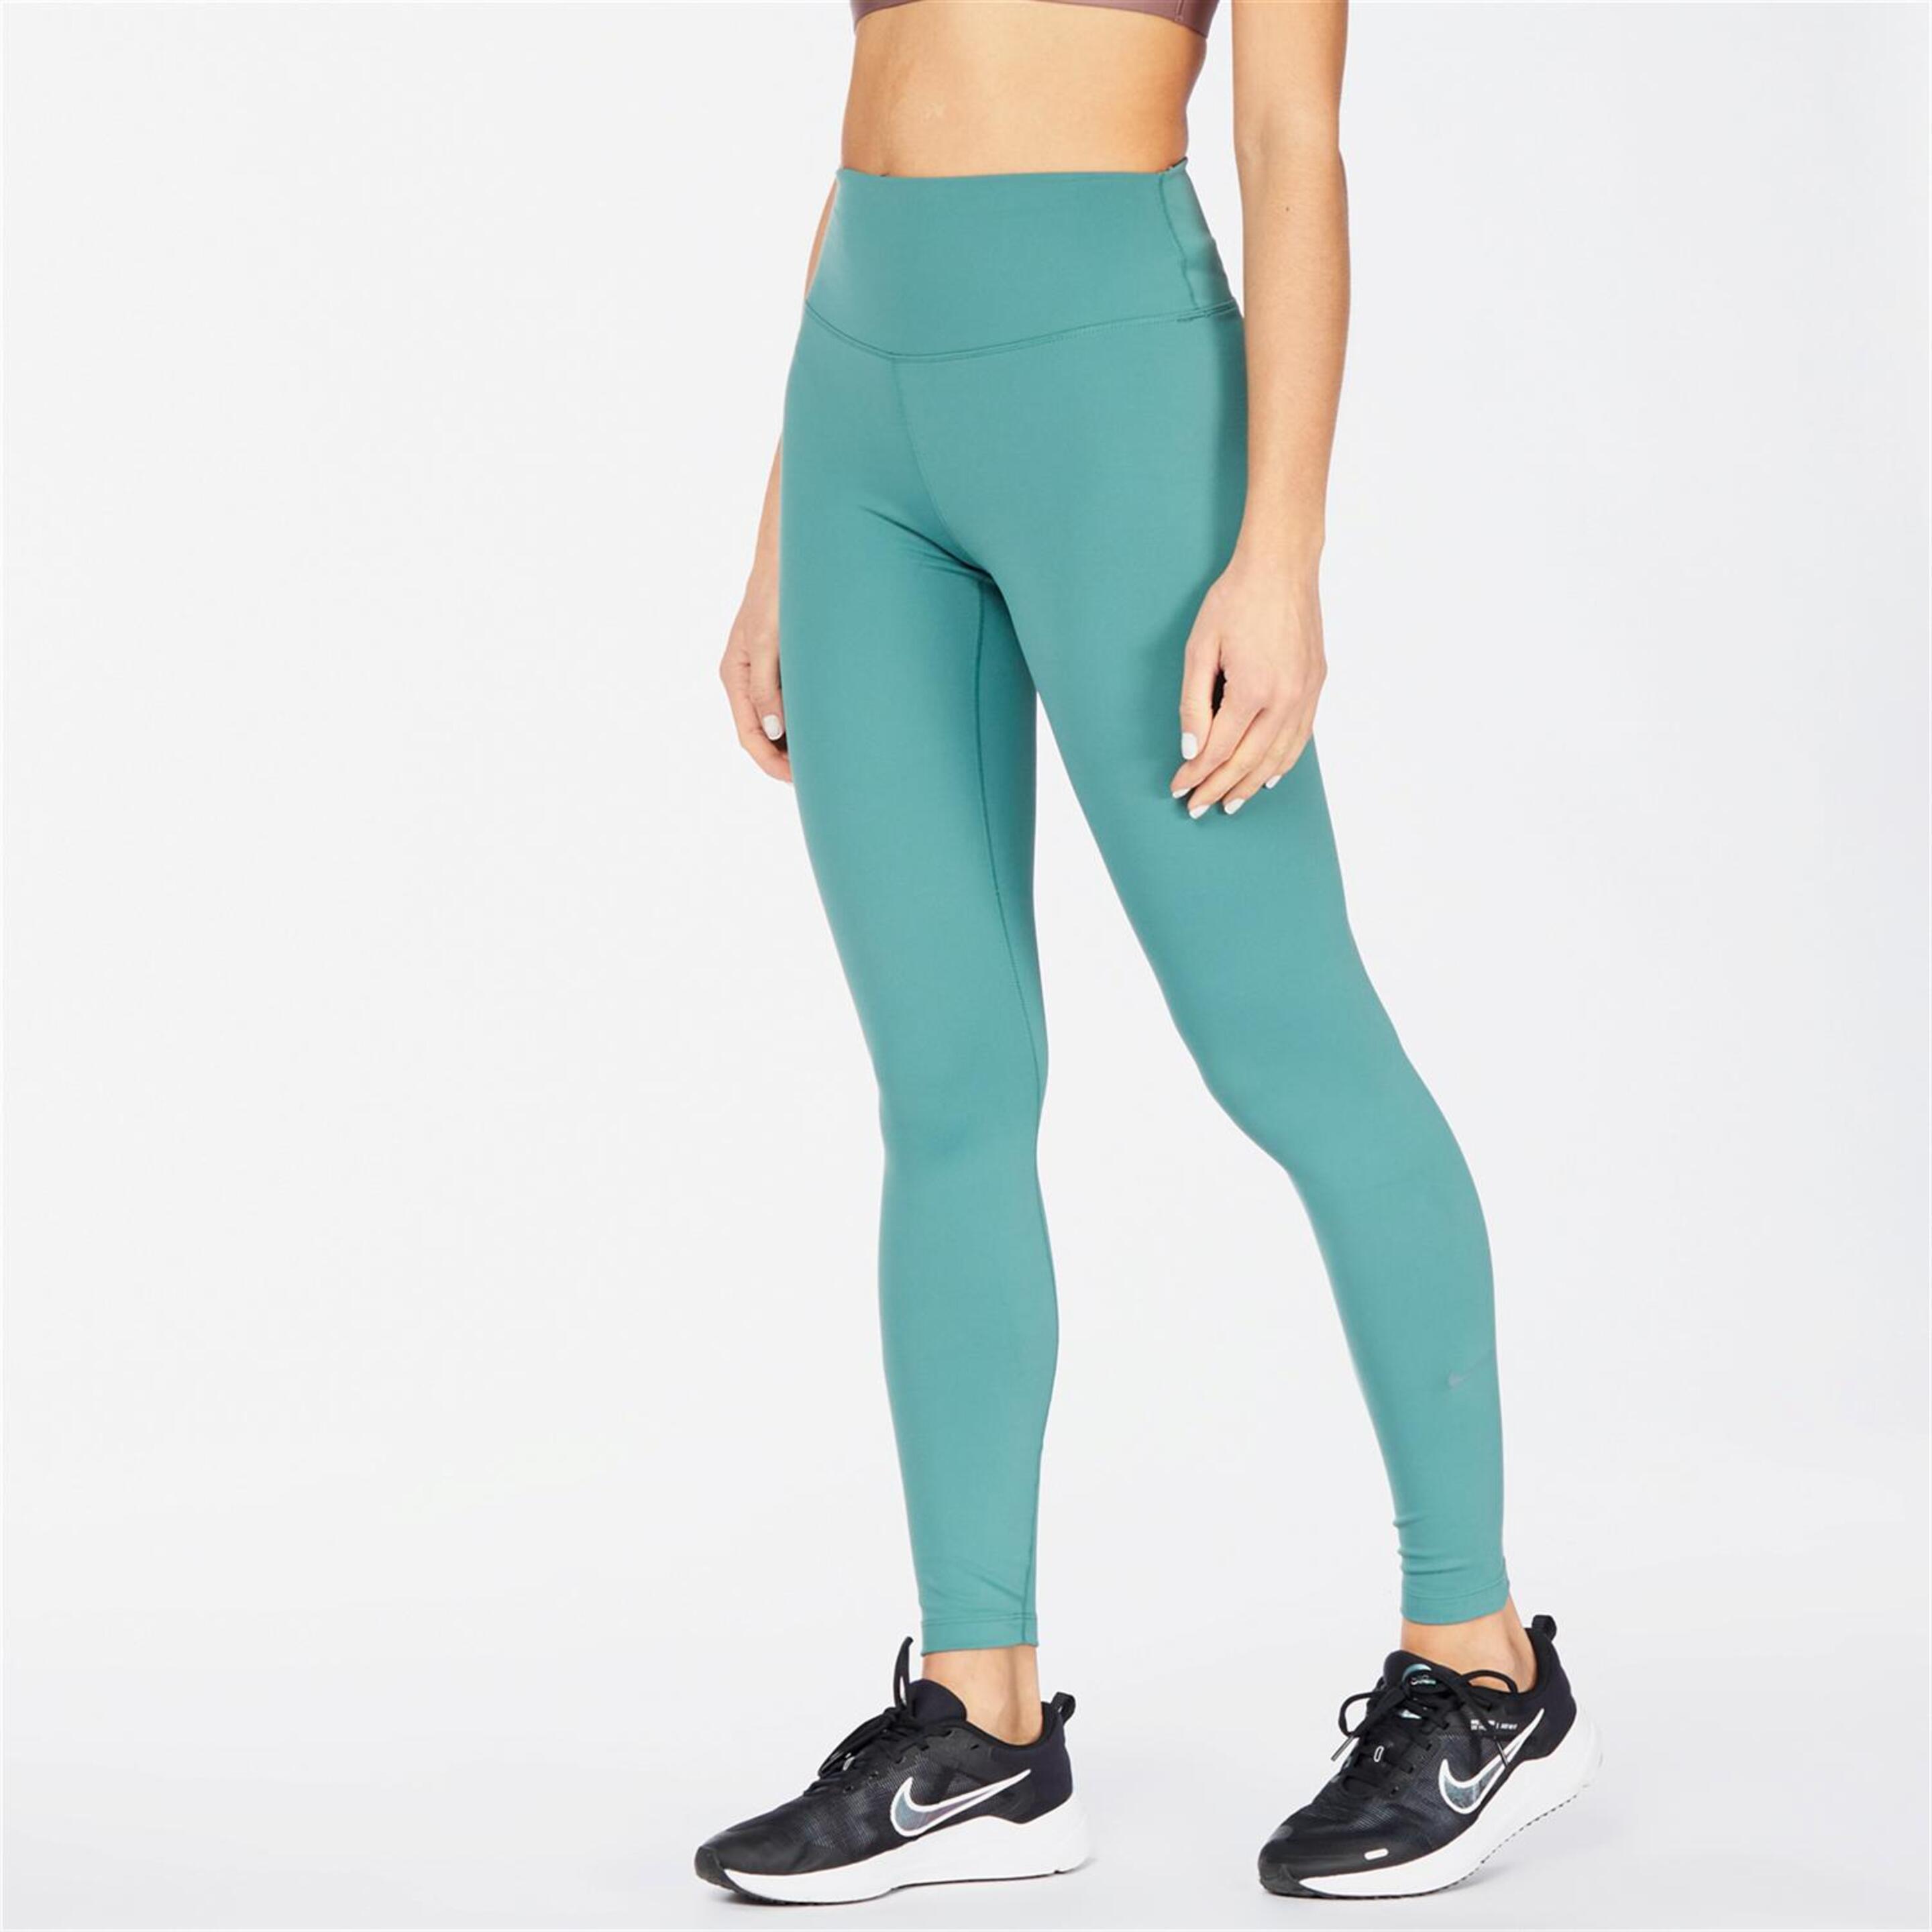 Nike Dri-fit One - verde - Leggings Fitness Mulher